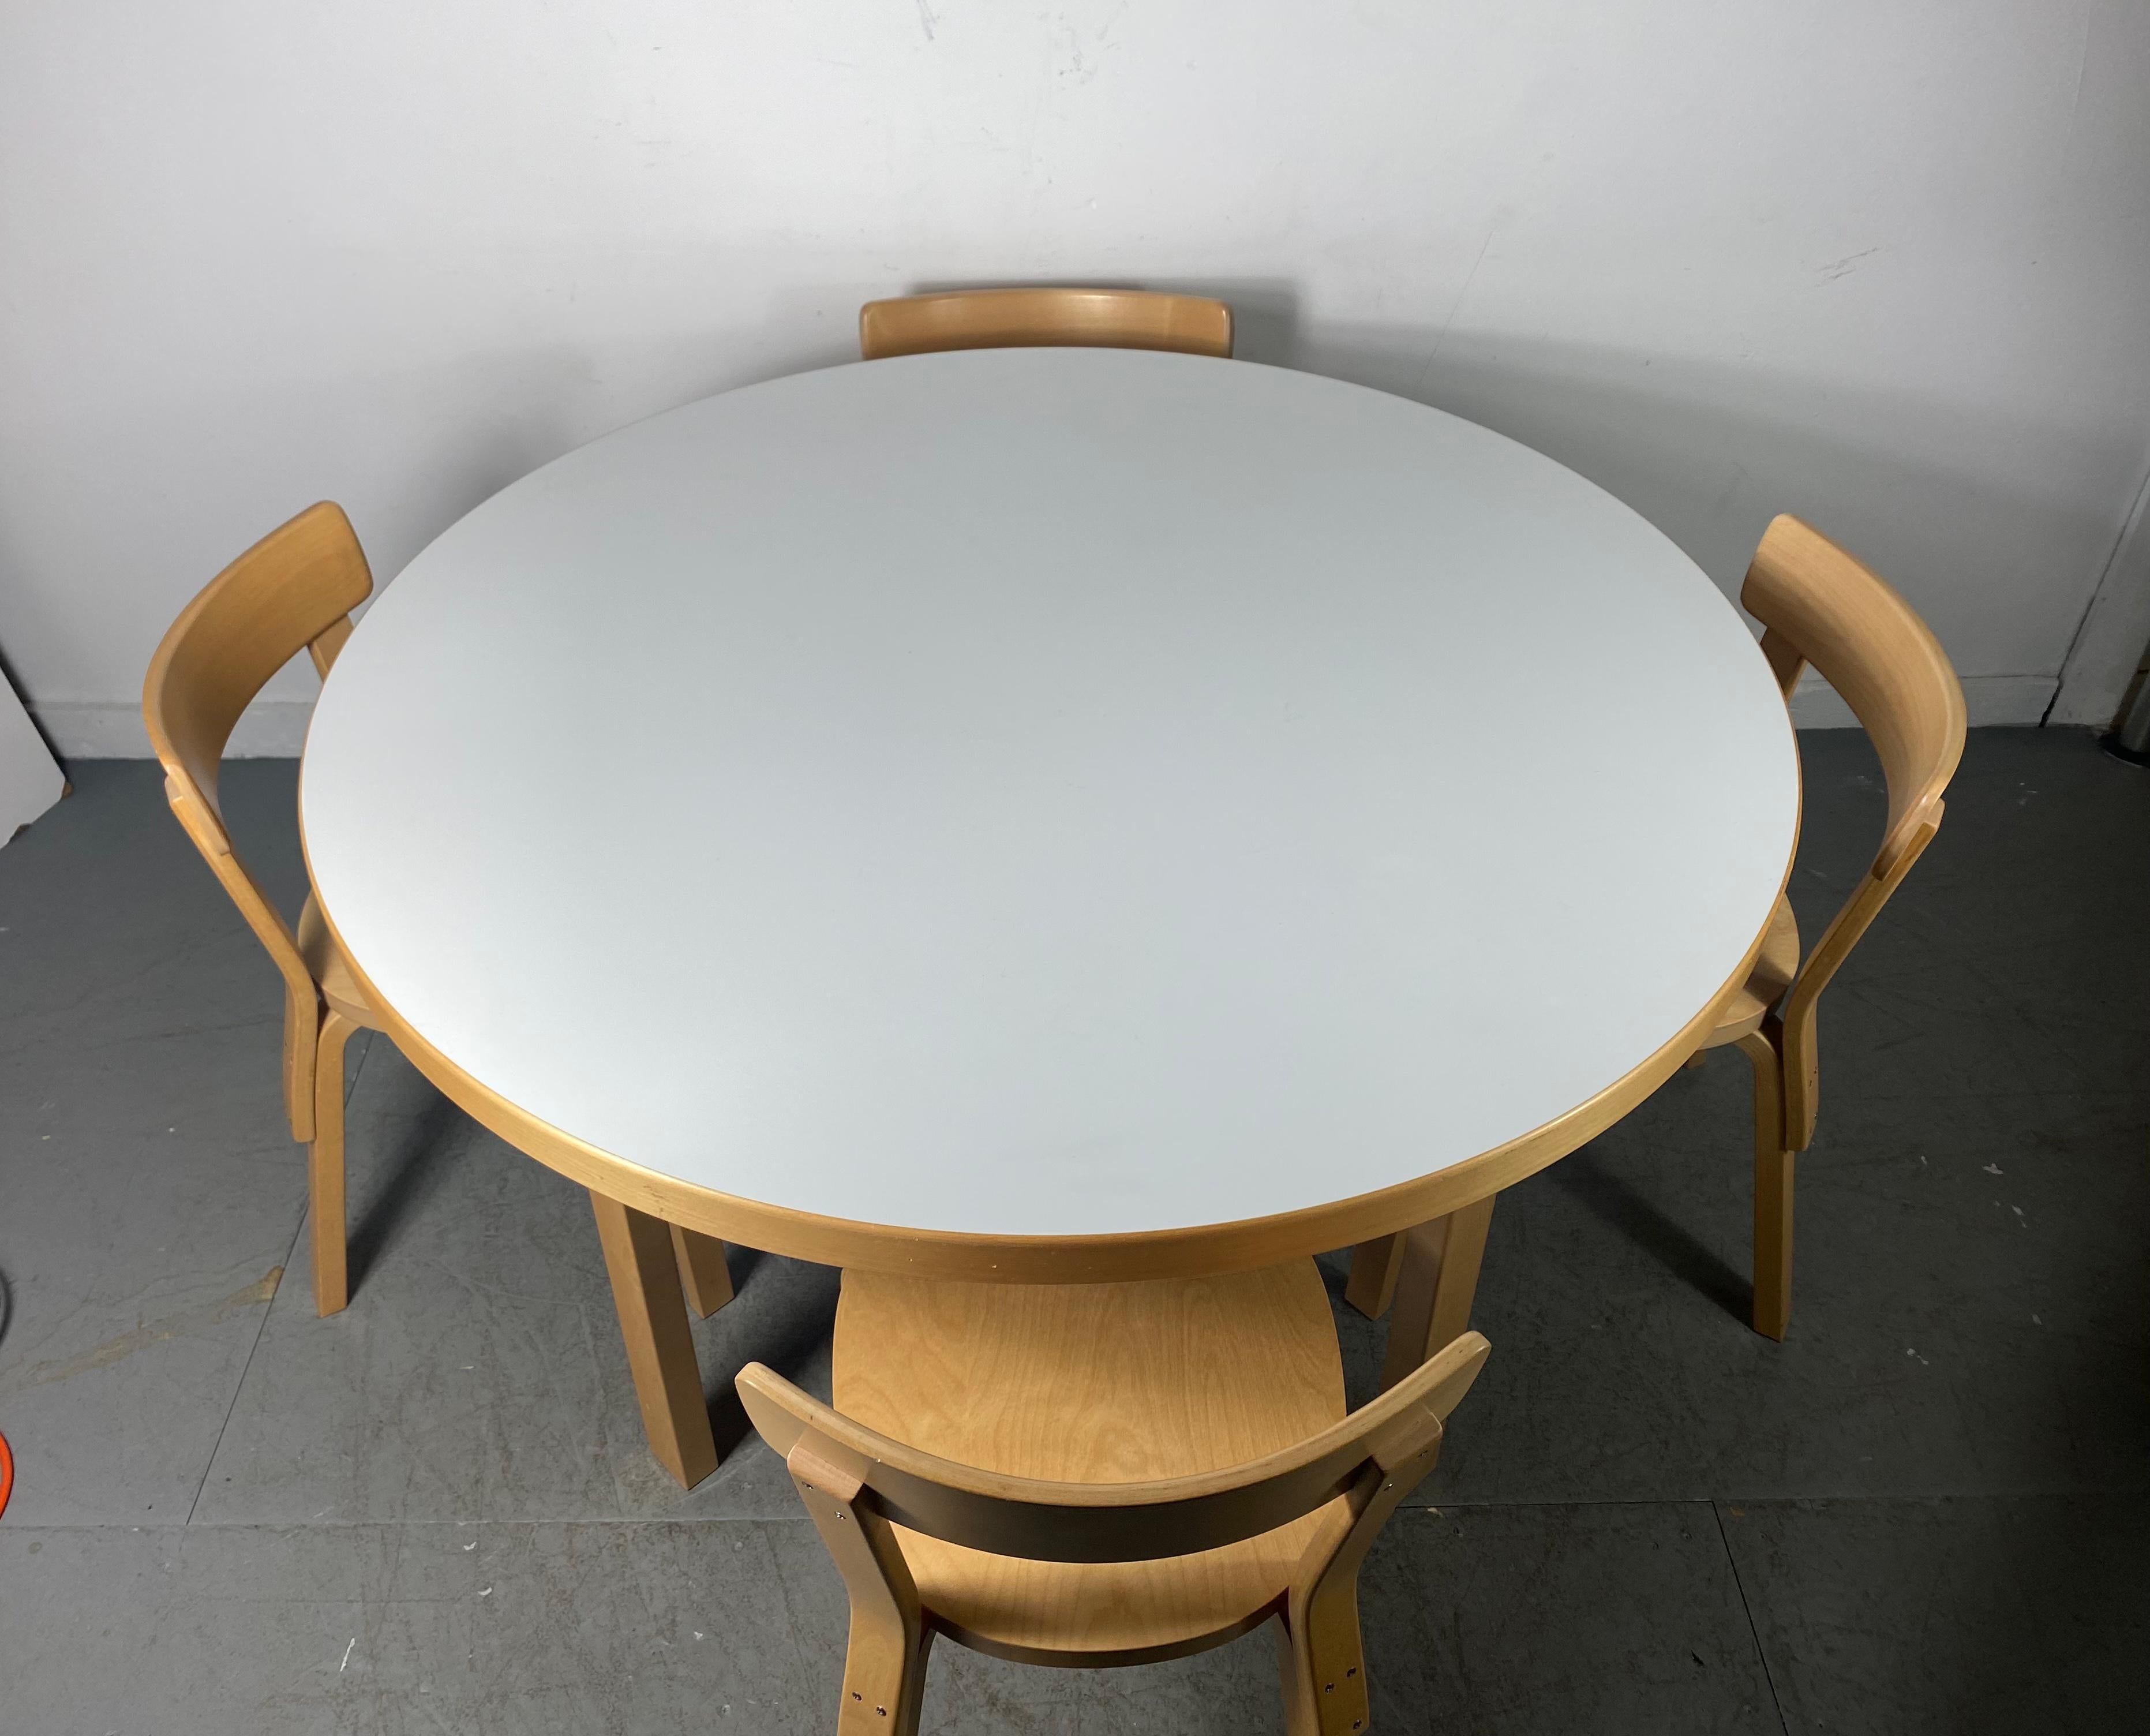 Contemporary Classic Modernist Bent Plywood Dinette Set by Alvar Aalto for Artek / Finland